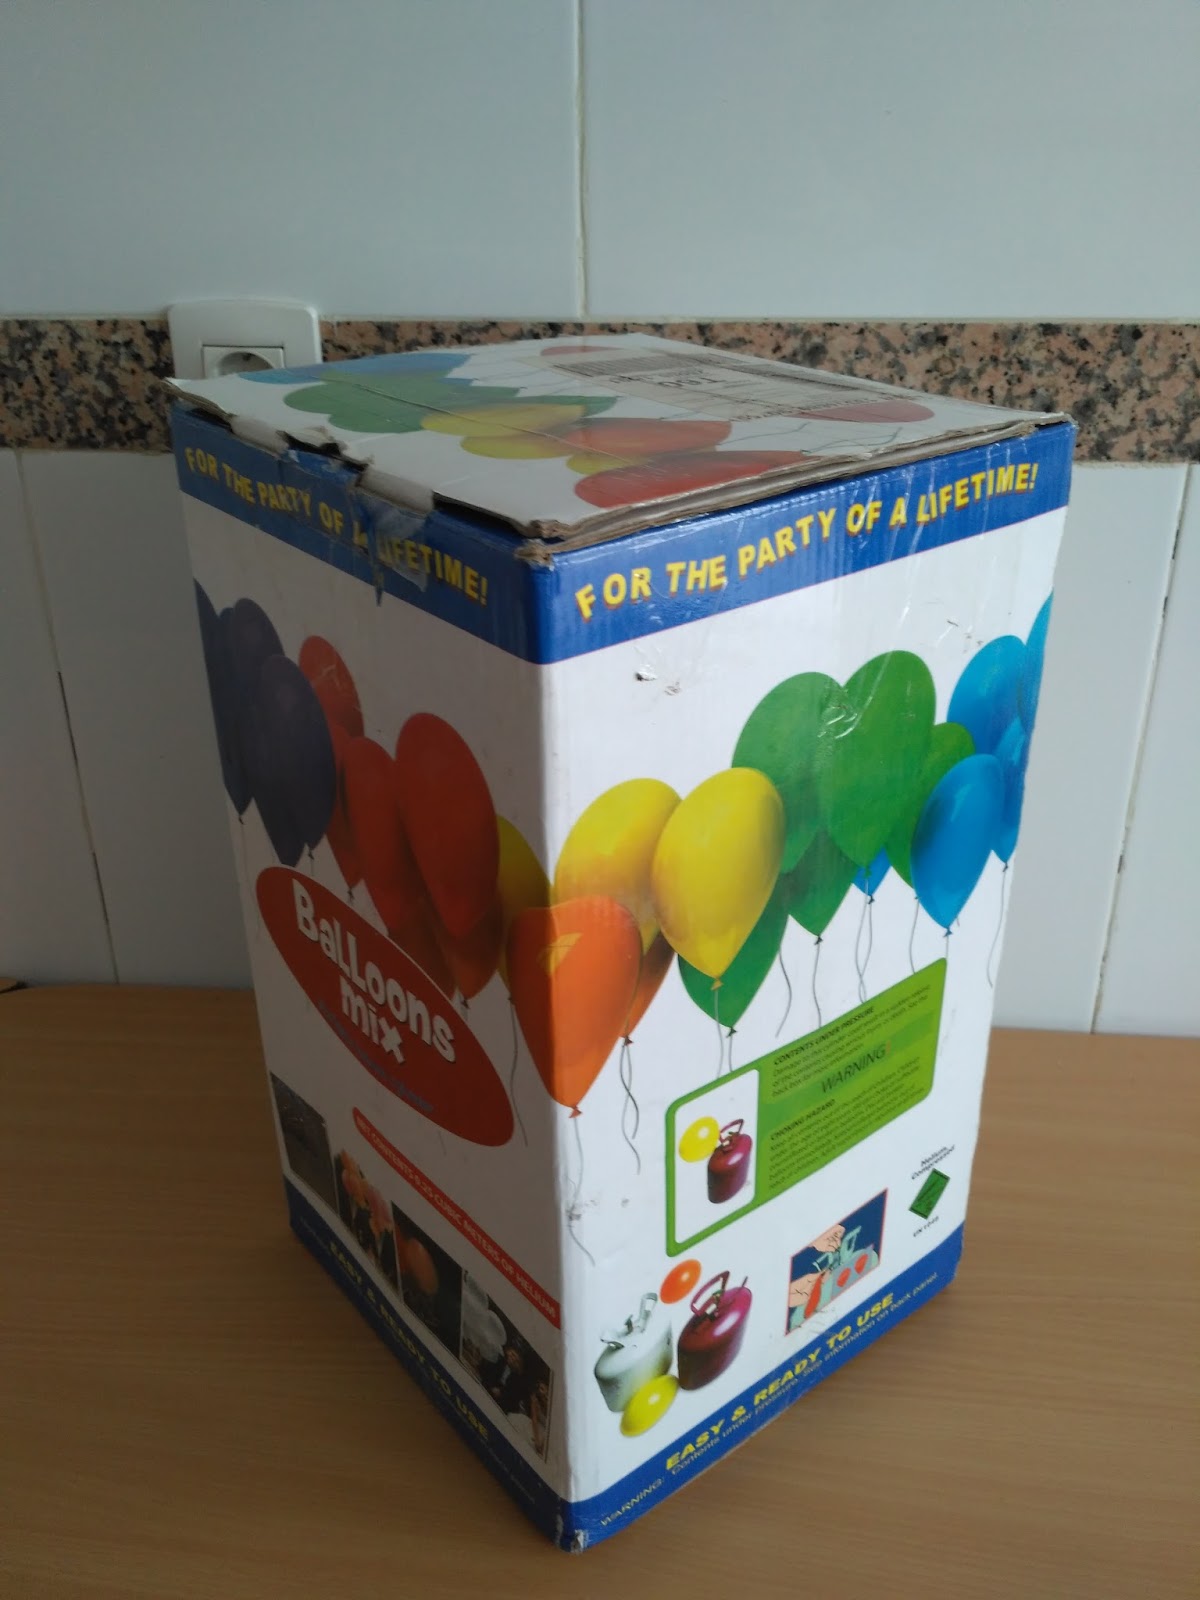 Globos de helio de cumpleaños de Frozen – Balloon Box